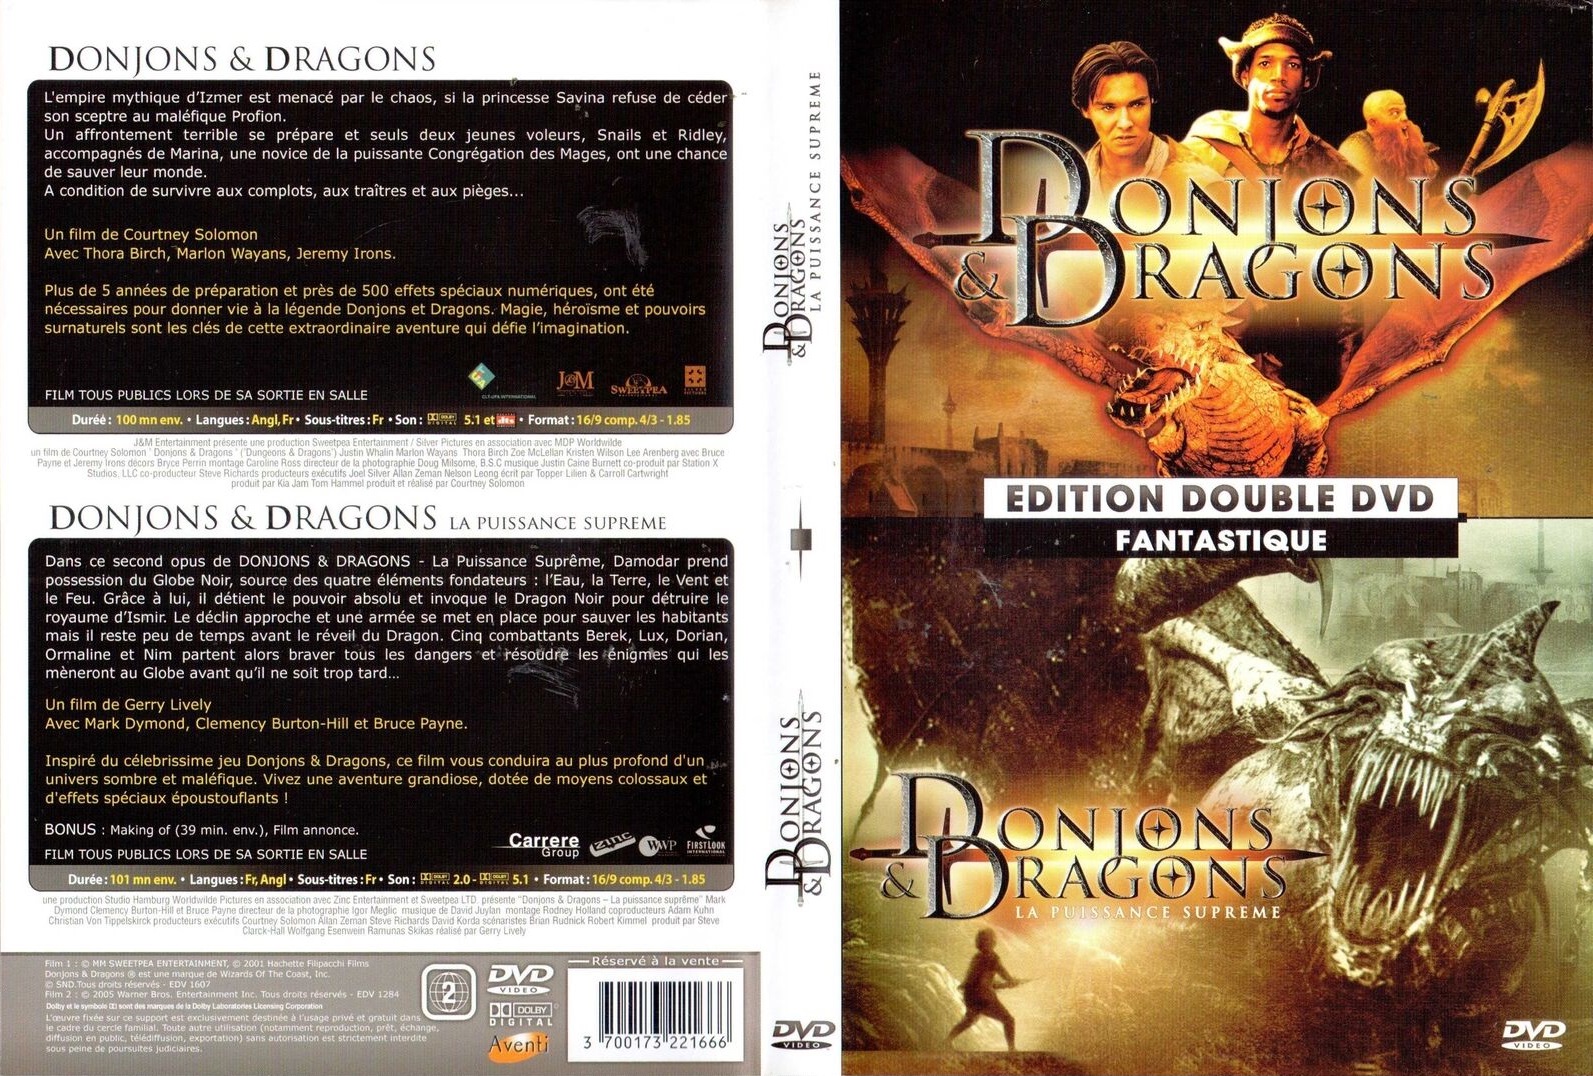 Jaquette DVD Donjons & Dragons 1 et 2